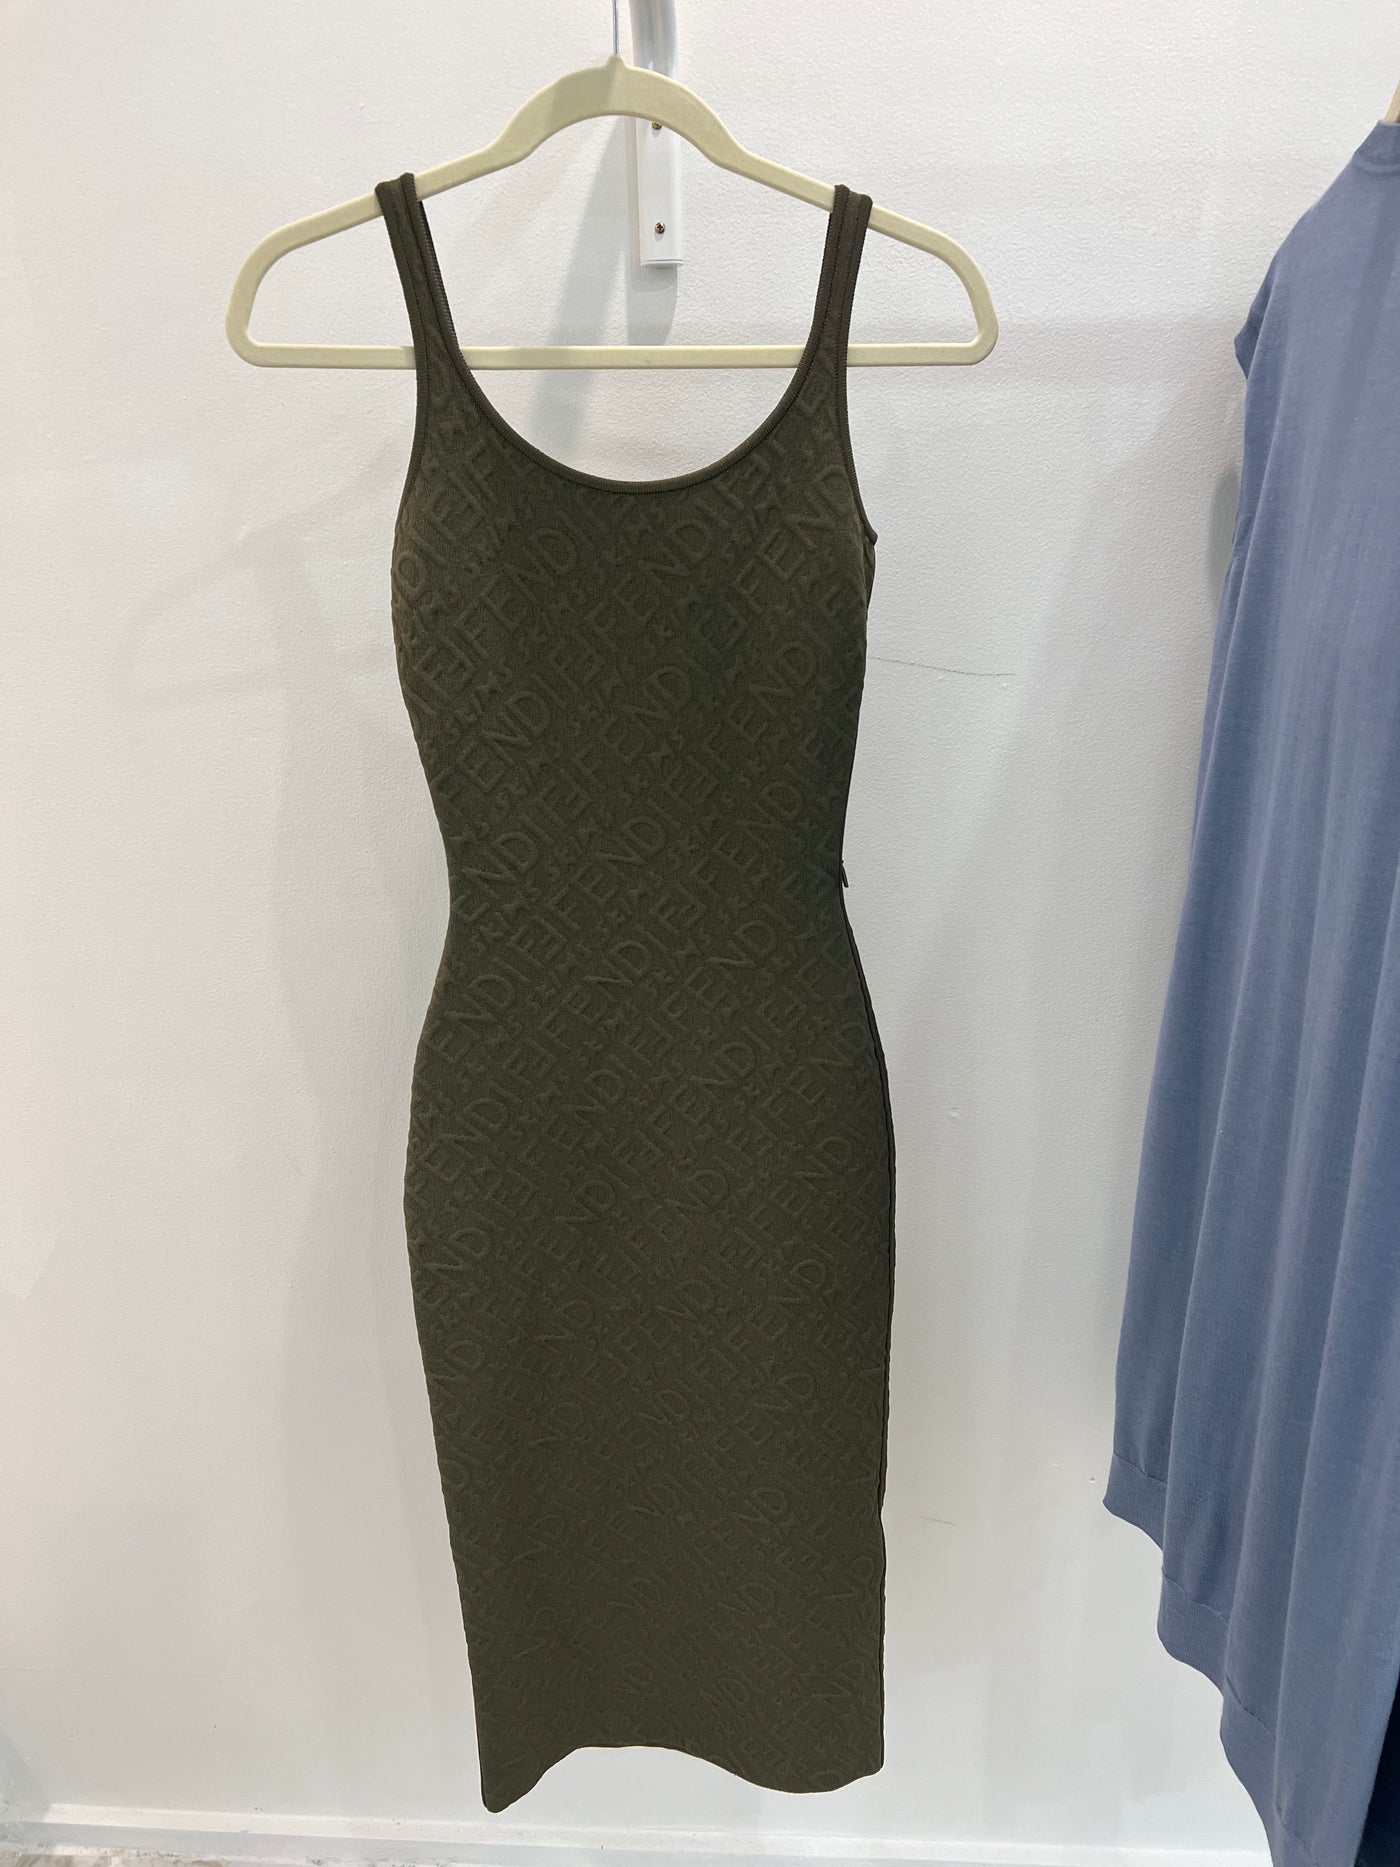 Fendi X Skims Dress - Size 36